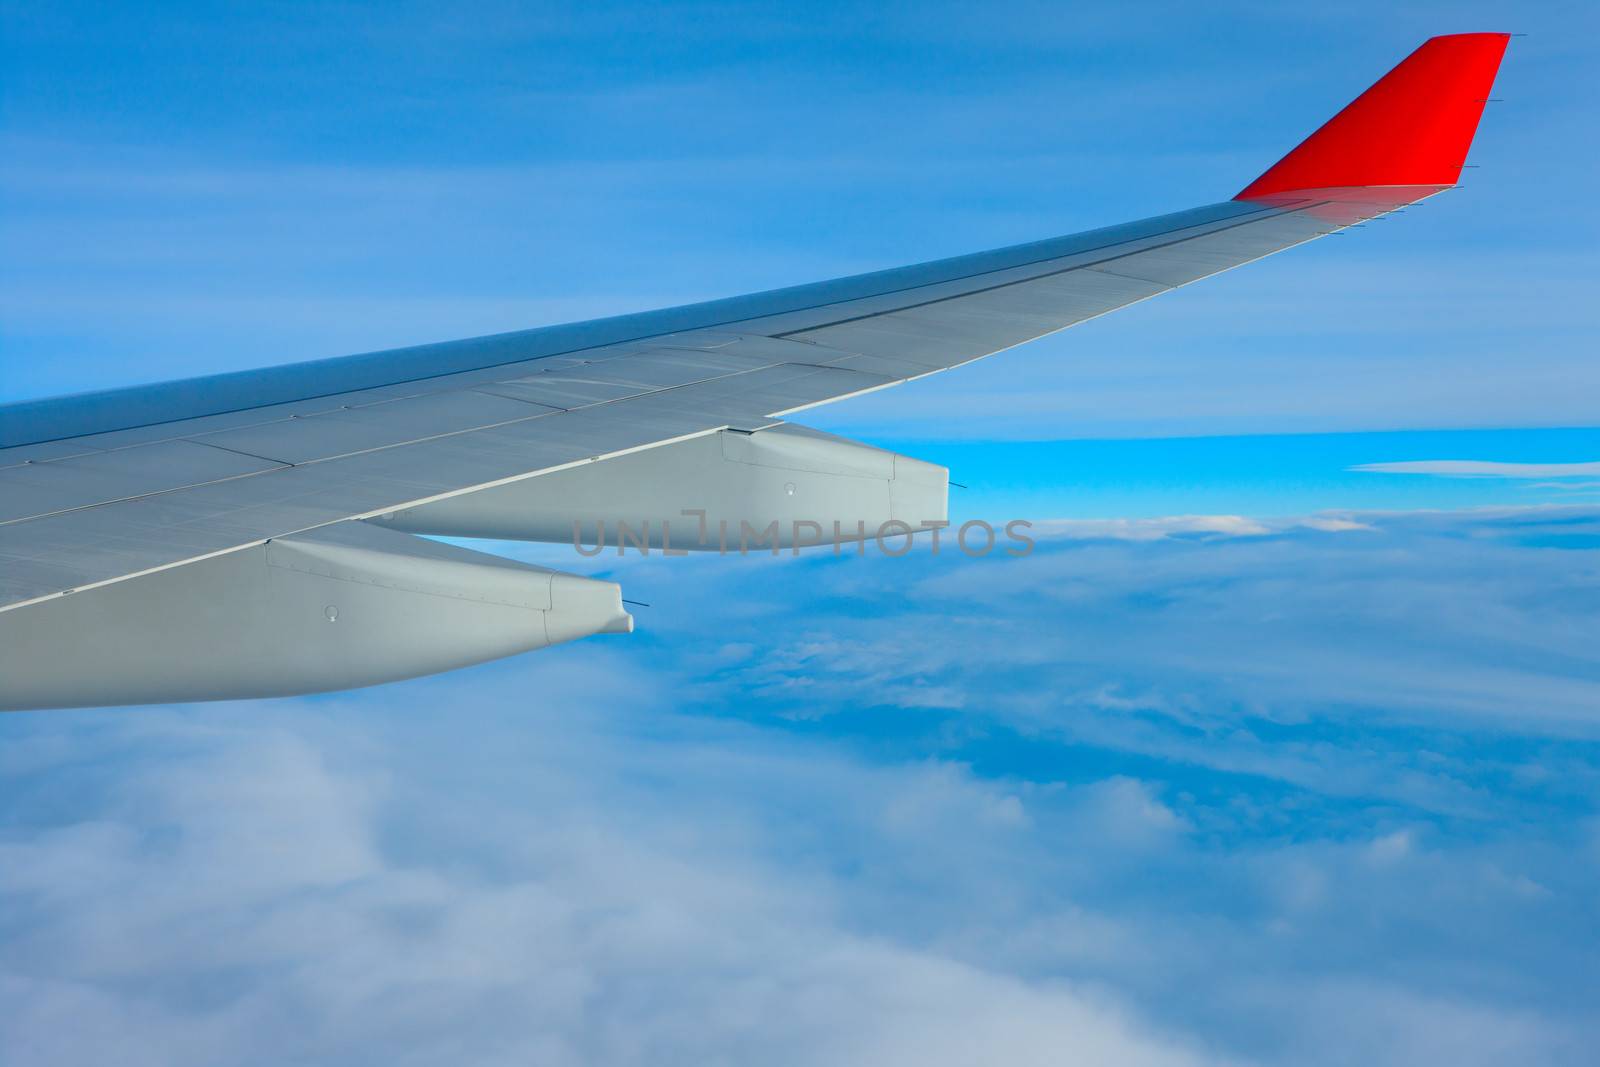 Air travel over the ocean of clouds by vladimir_sklyarov